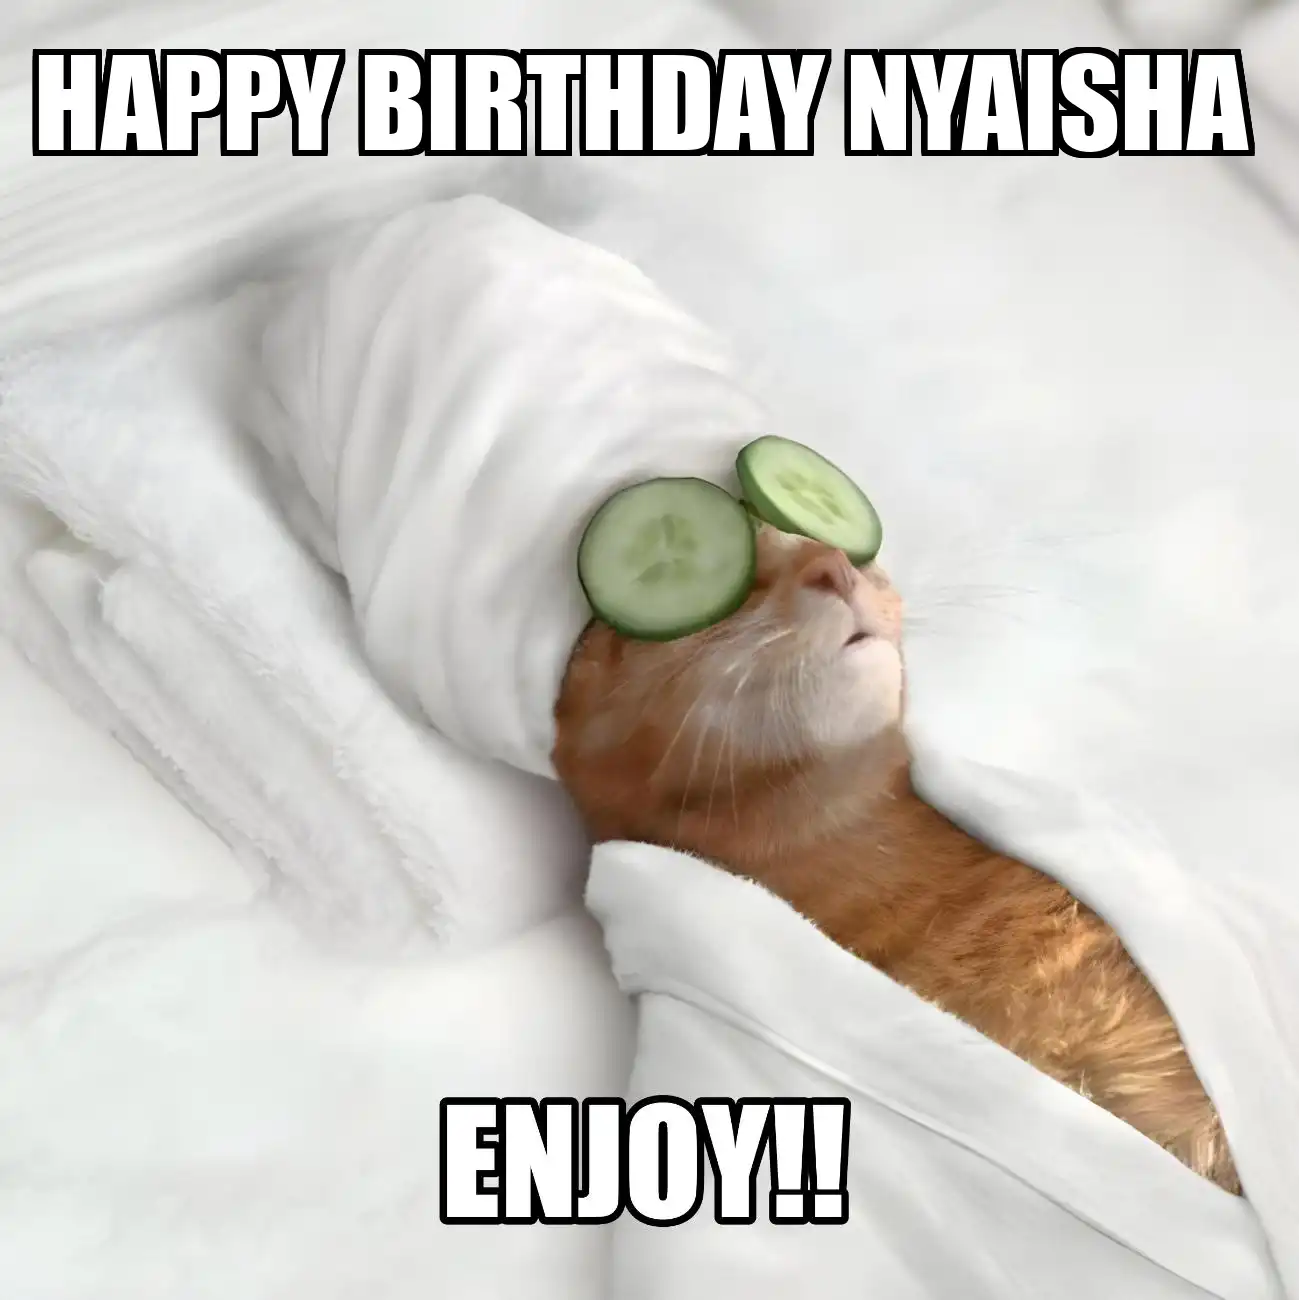 Happy Birthday Nyaisha Enjoy Cat Meme